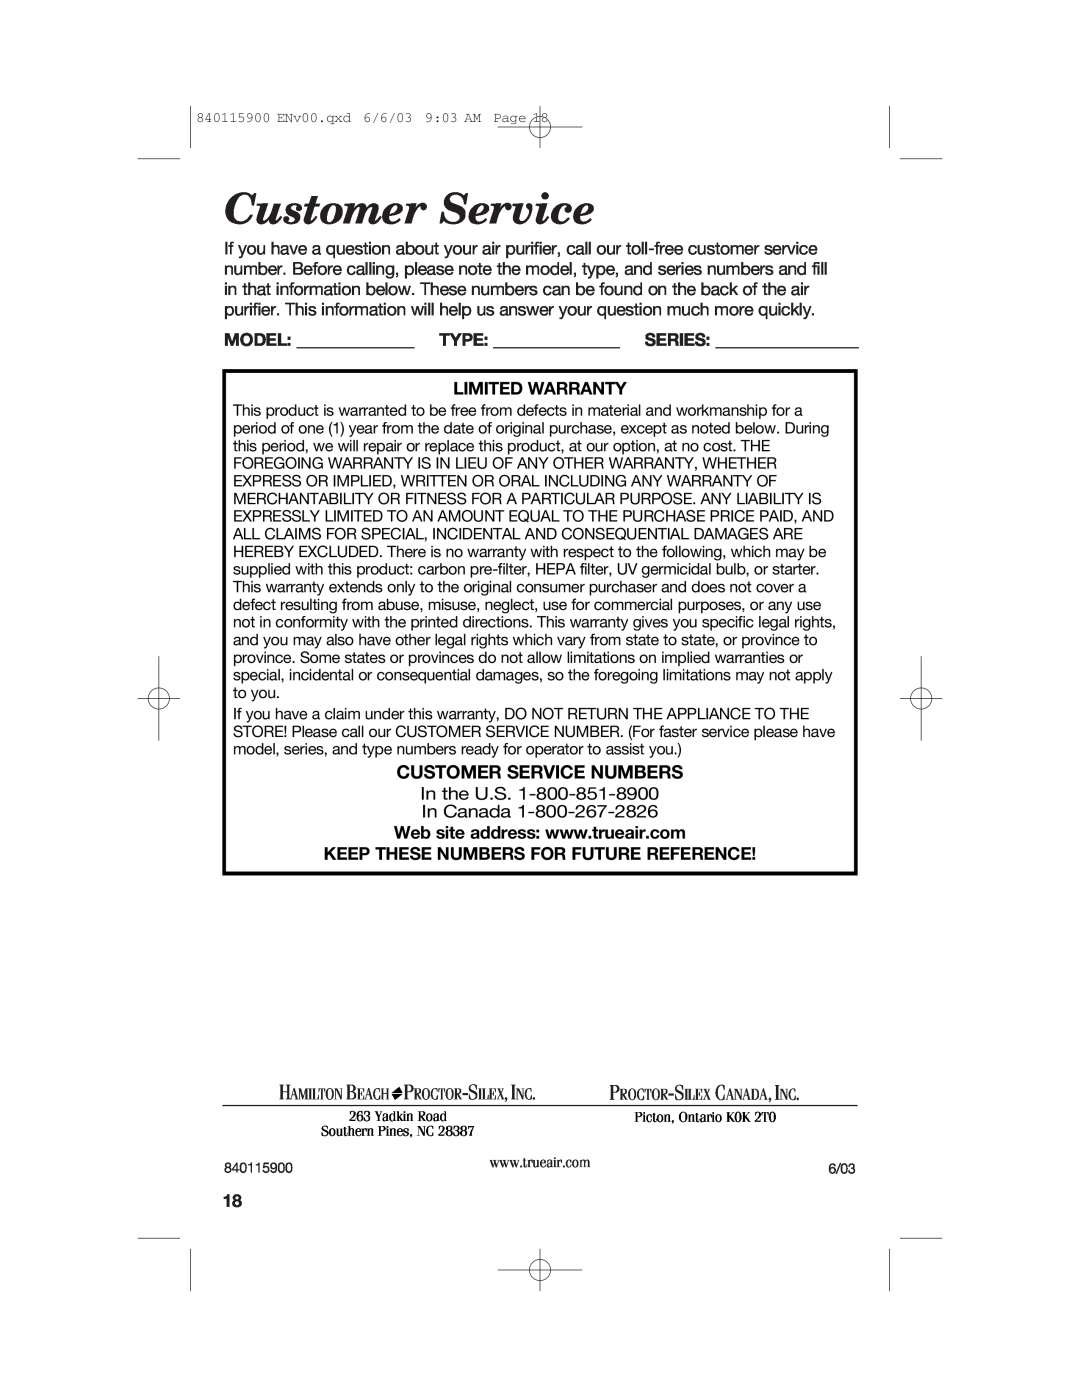 Hamilton Beach 840115900 manual Customer Service Numbers 